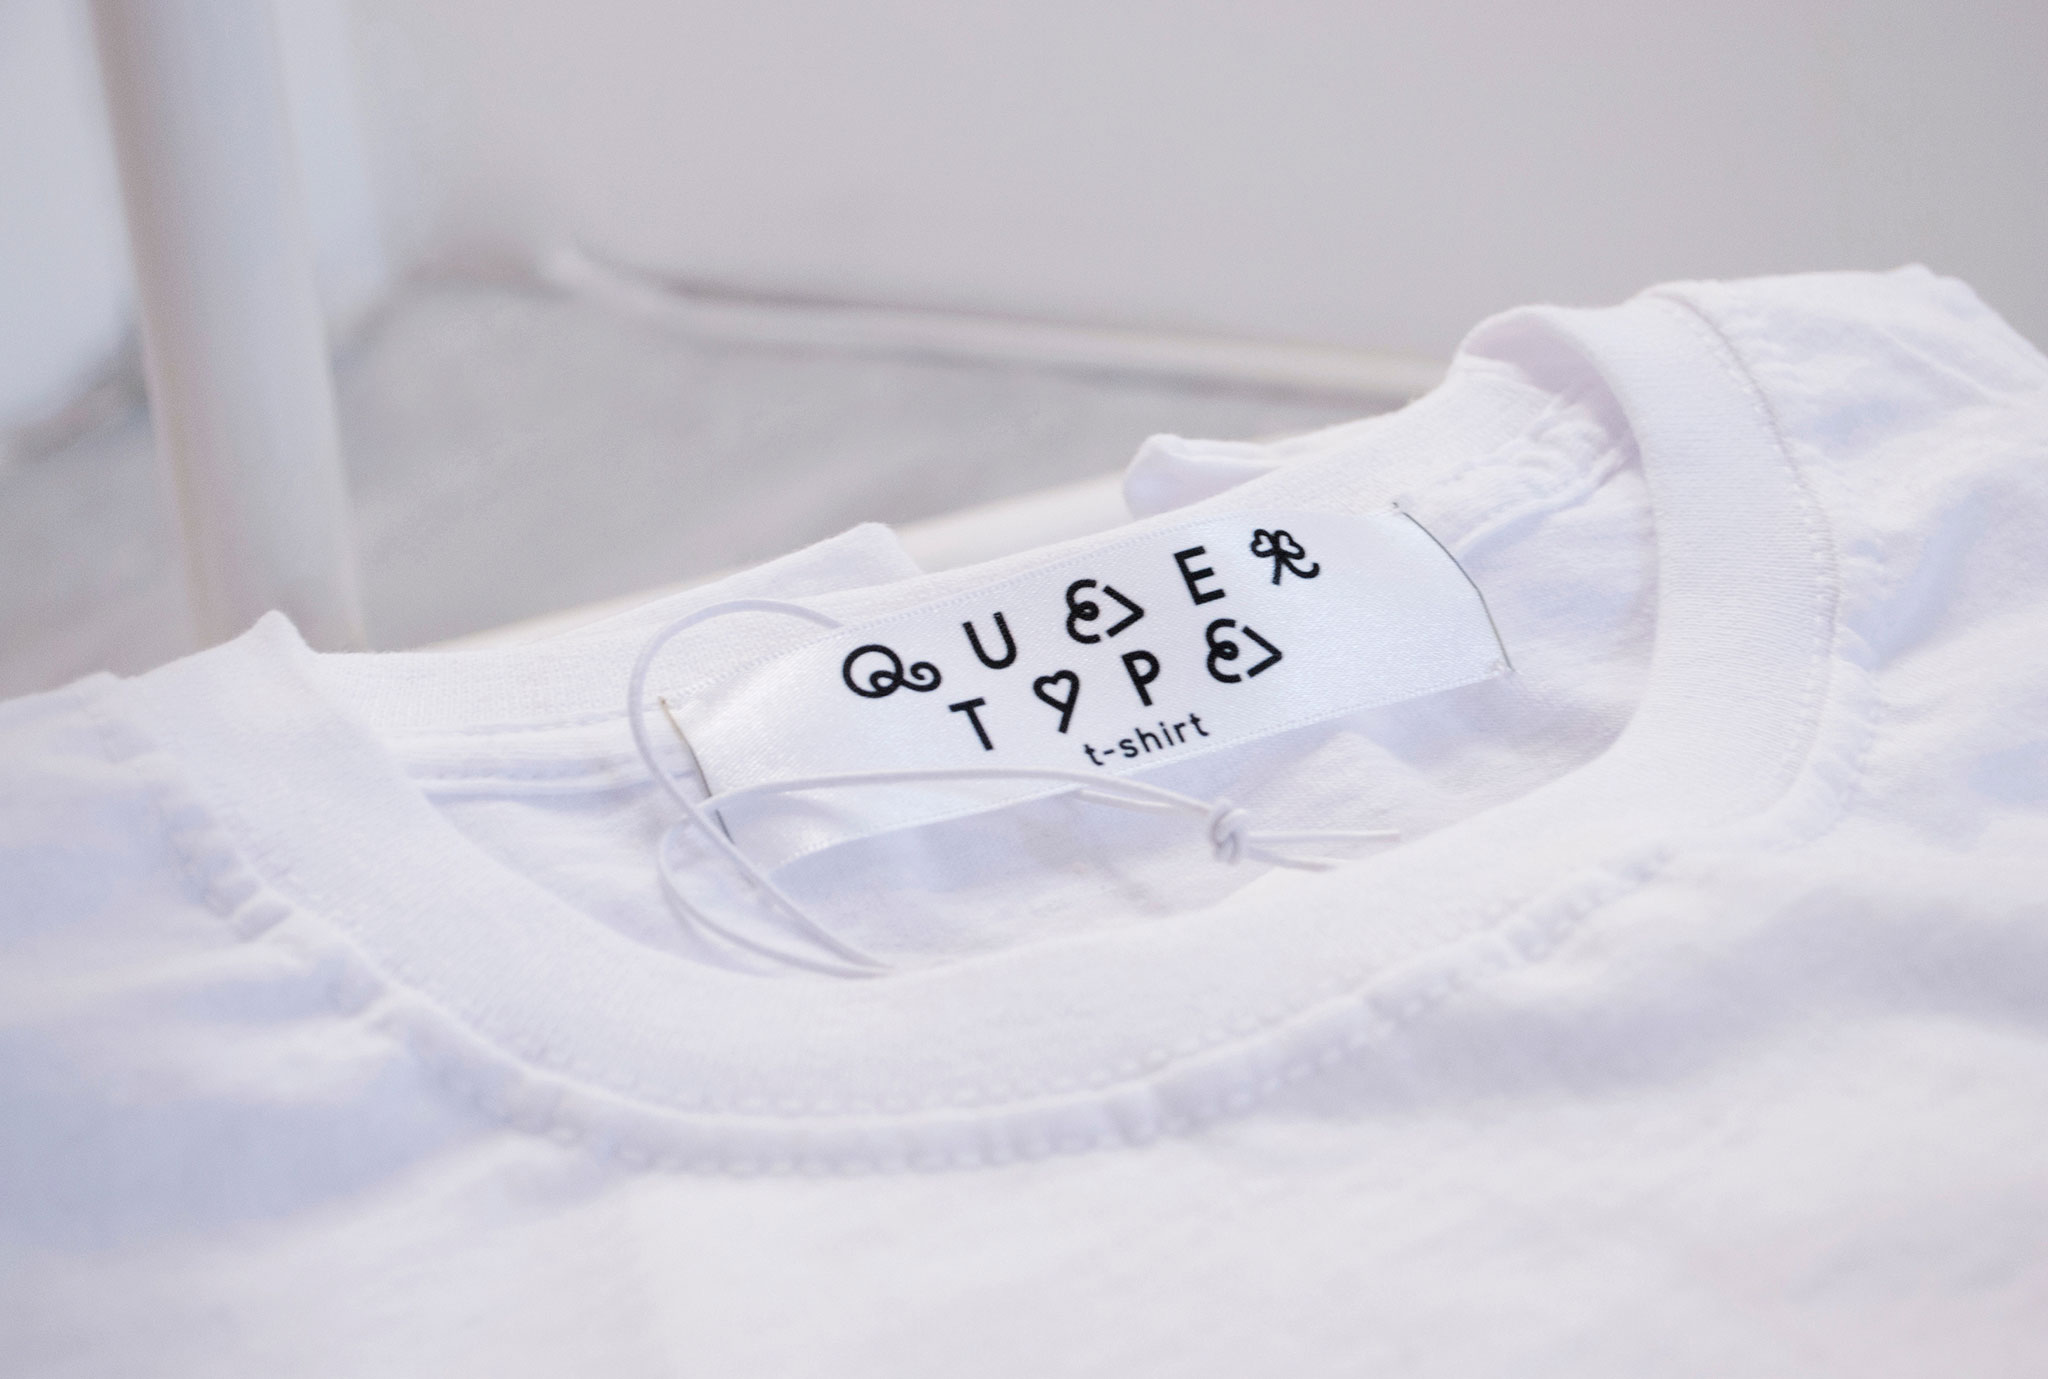 queertype t-shirts label